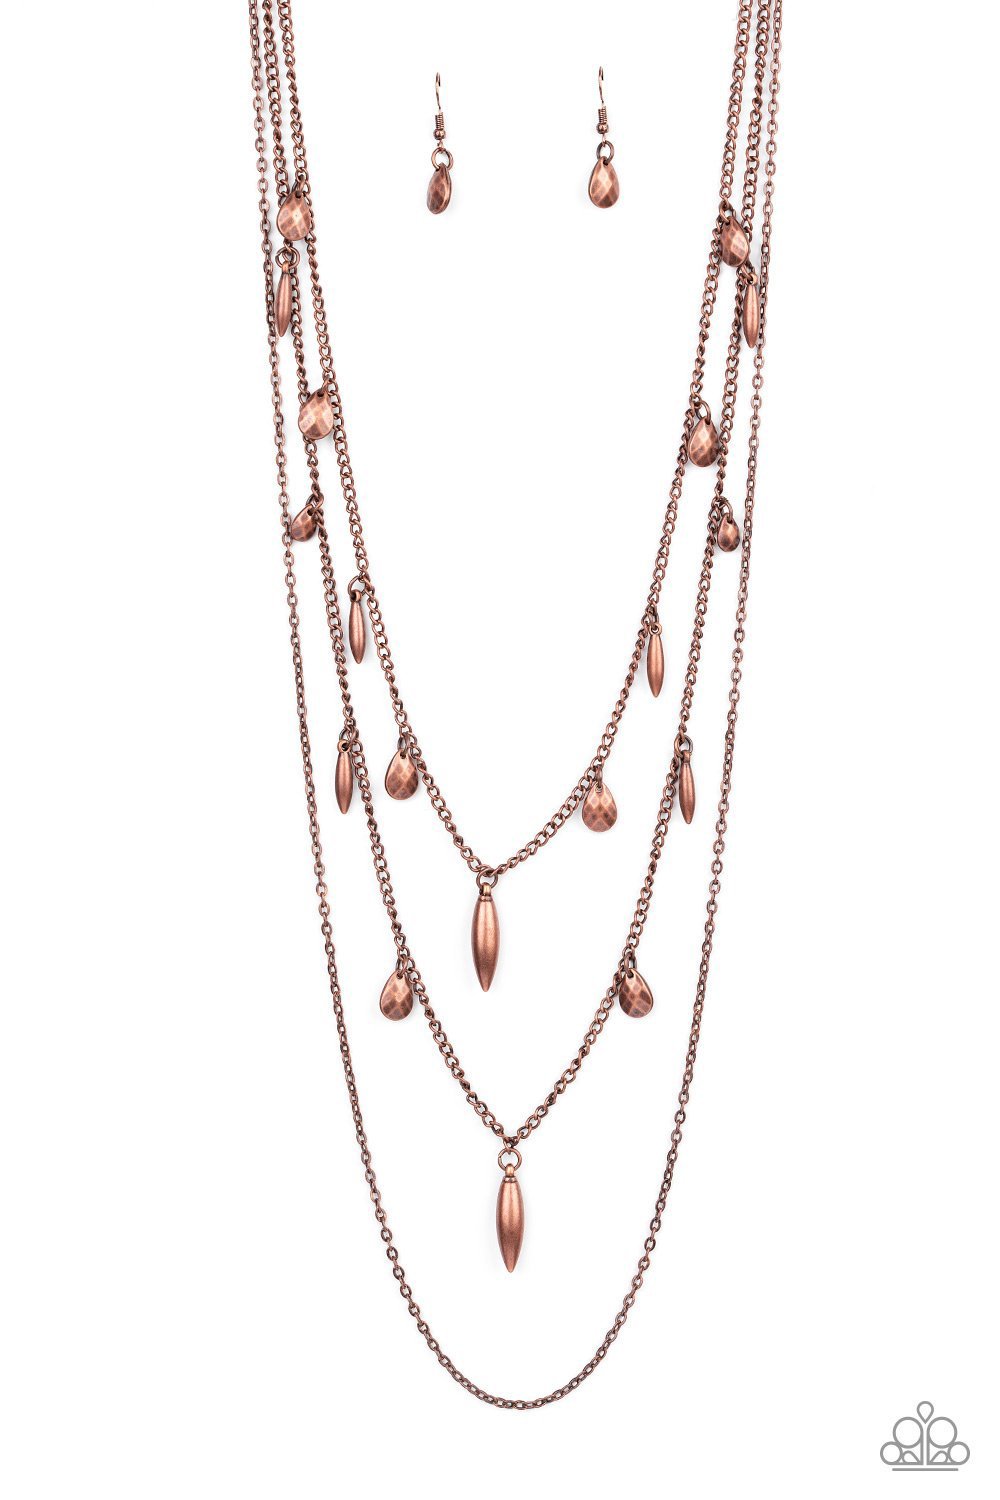 Bravo Bravado - Copper Necklace freeshipping - JewLz4u Gemstone Gallery